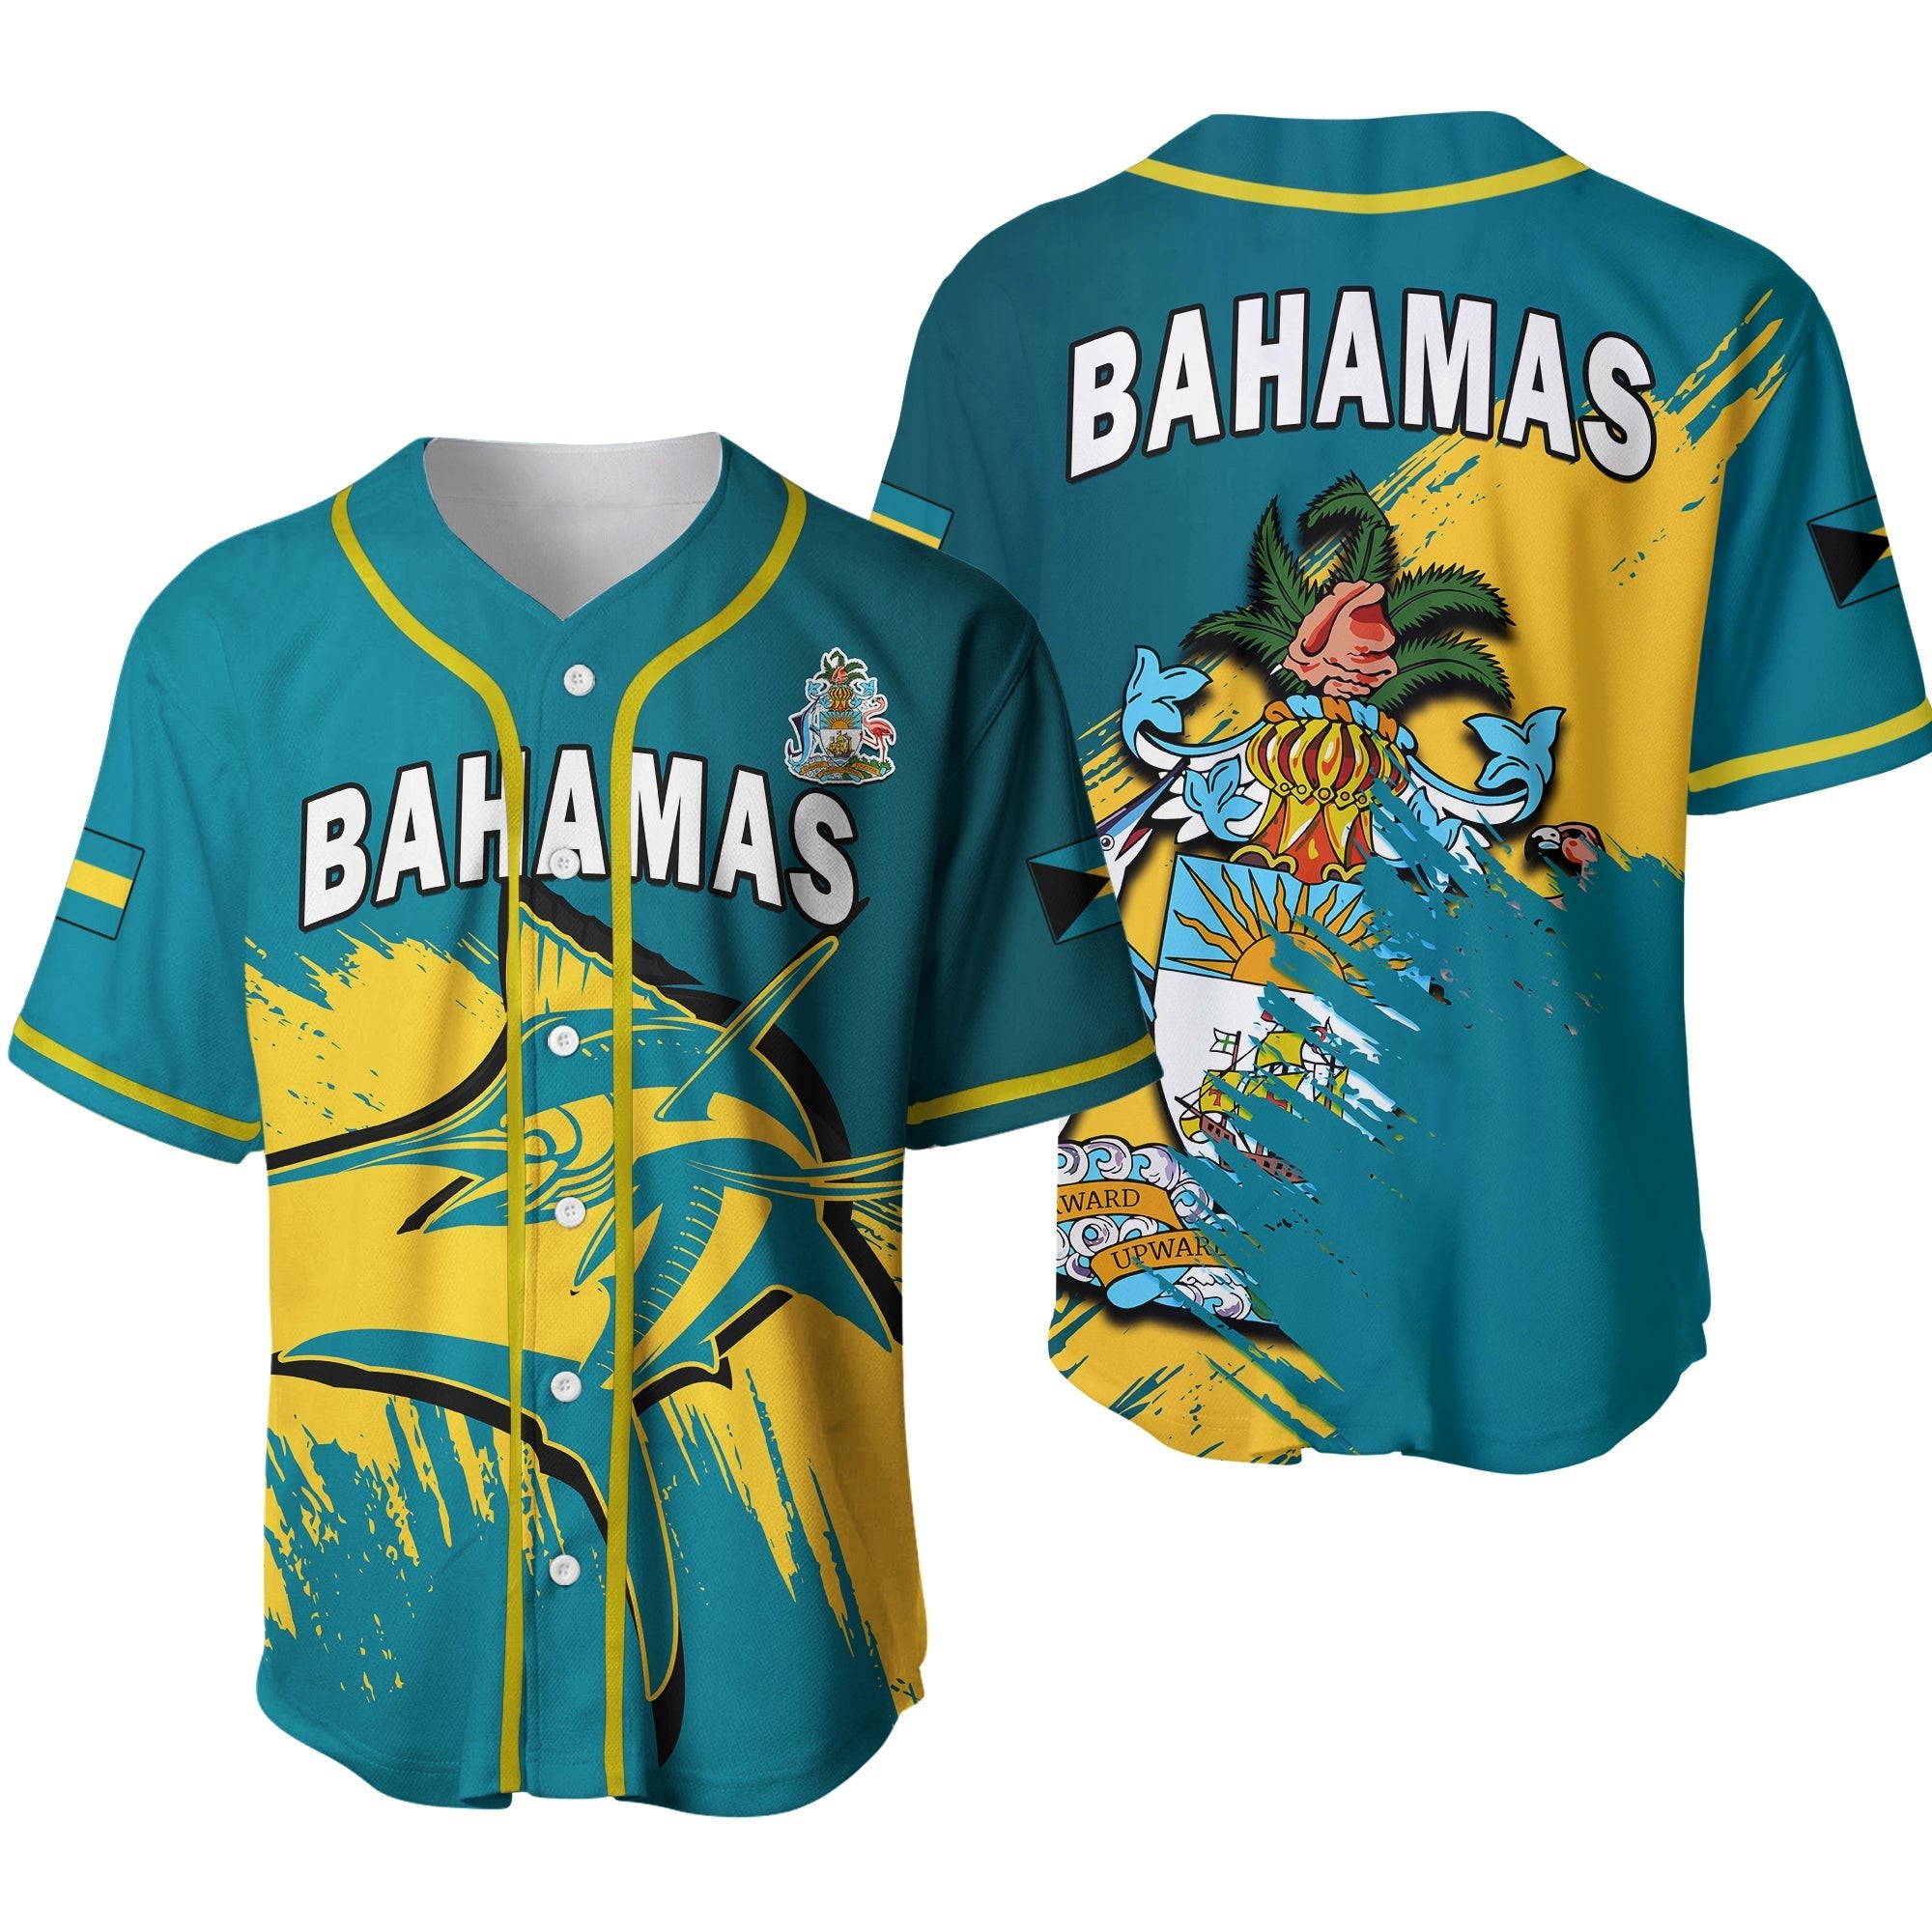 bahamas-baseball-jersey-blue-marlin-with-bahamian-coat-of-arms-ver02